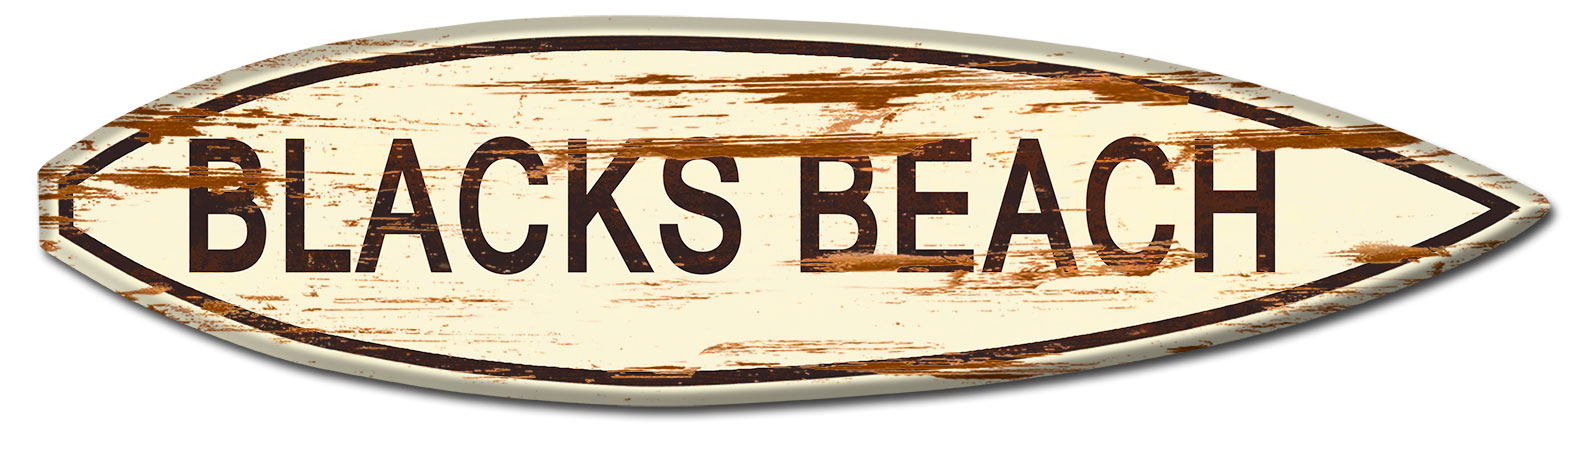 Blacks Beach Surf Board Wood Print Vintage Sign